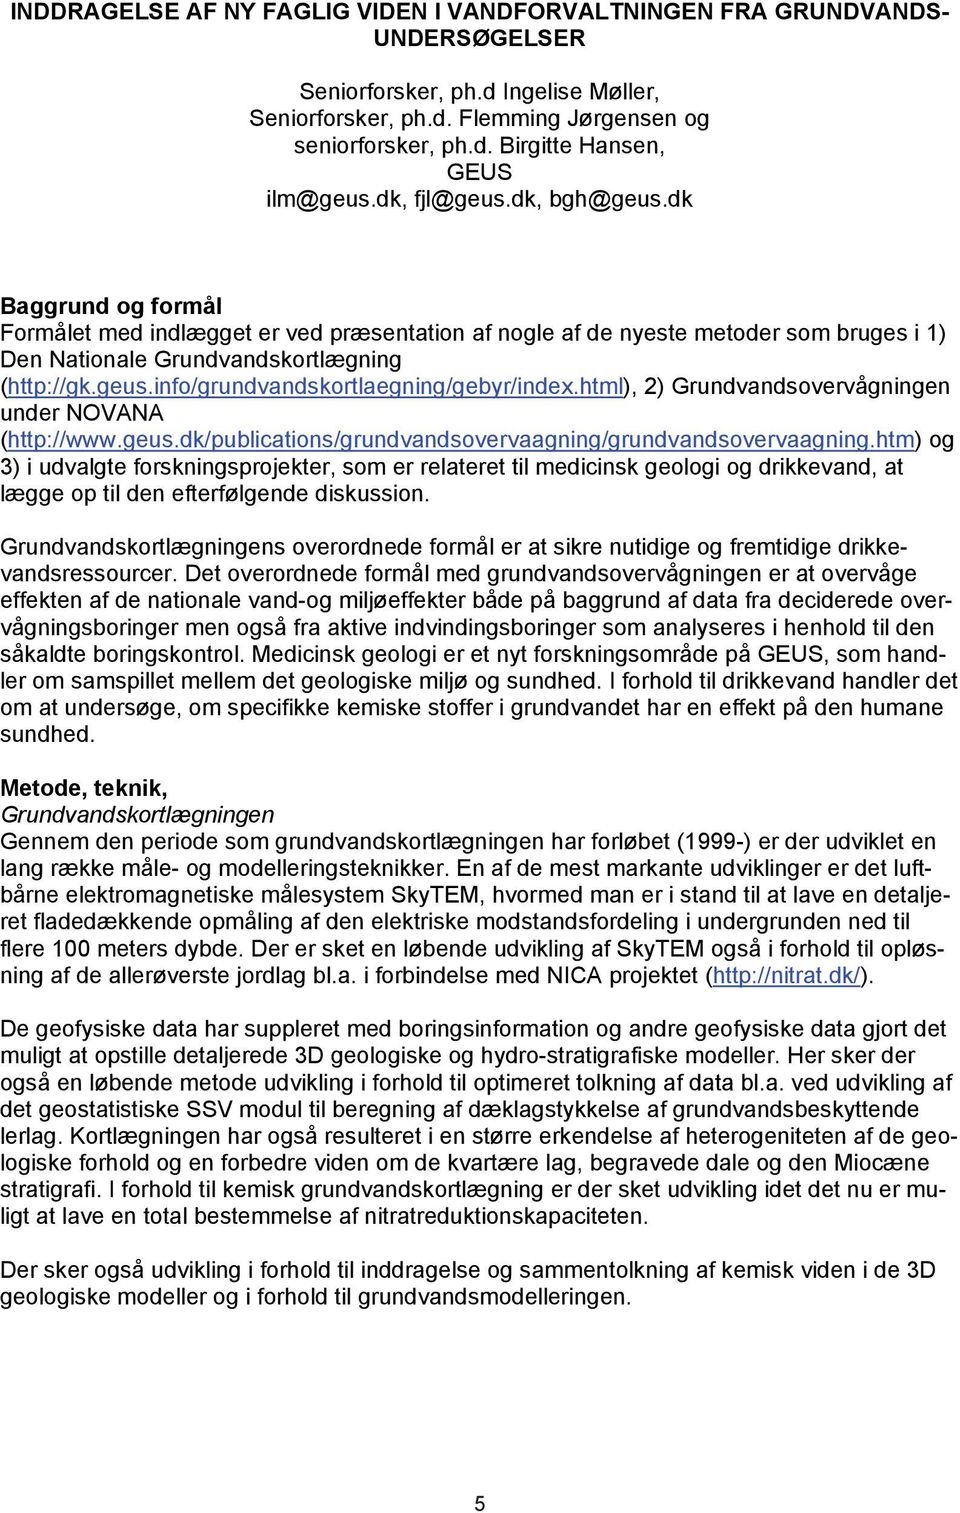 html), 2) Grundvandsovervågningen under NOVANA (http://www.geus.dk/publications/grundvandsovervaagning/grundvandsovervaagning.